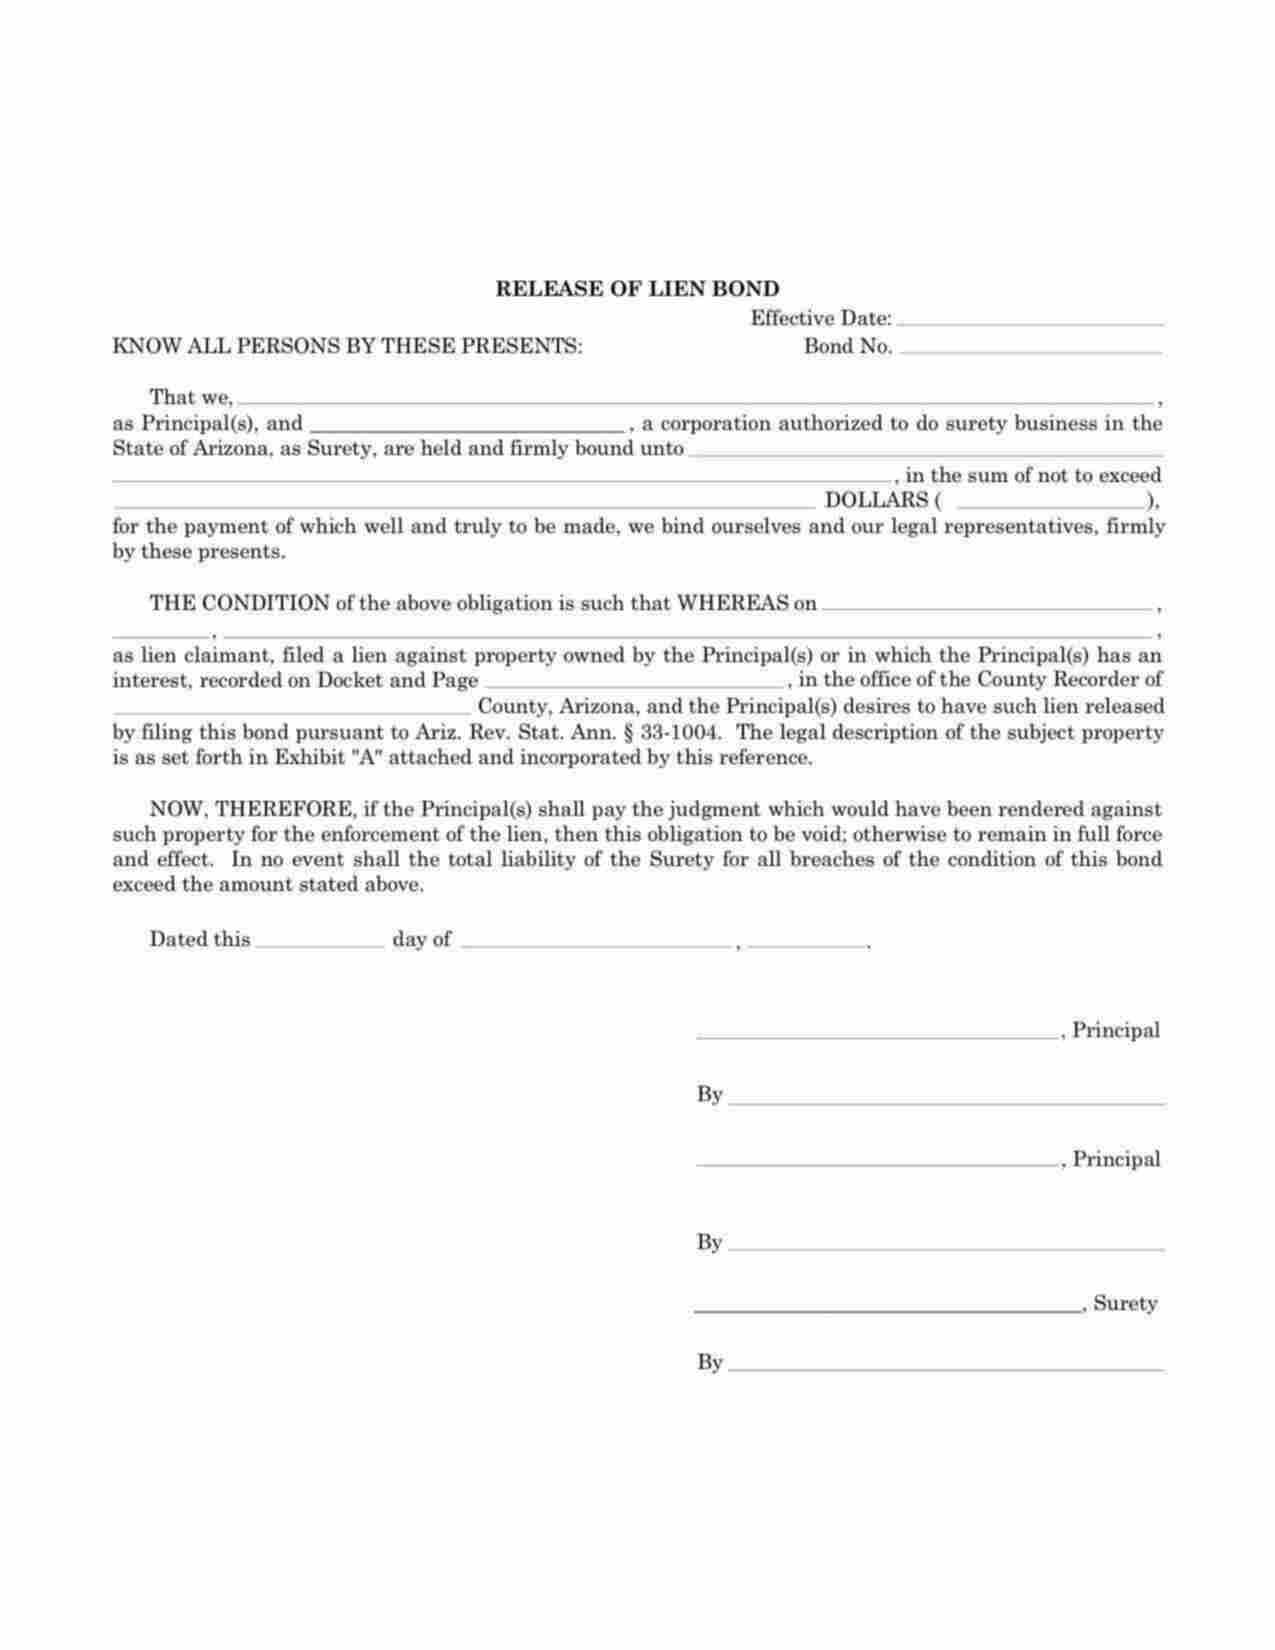 Arizona Release of Lien Bond Form